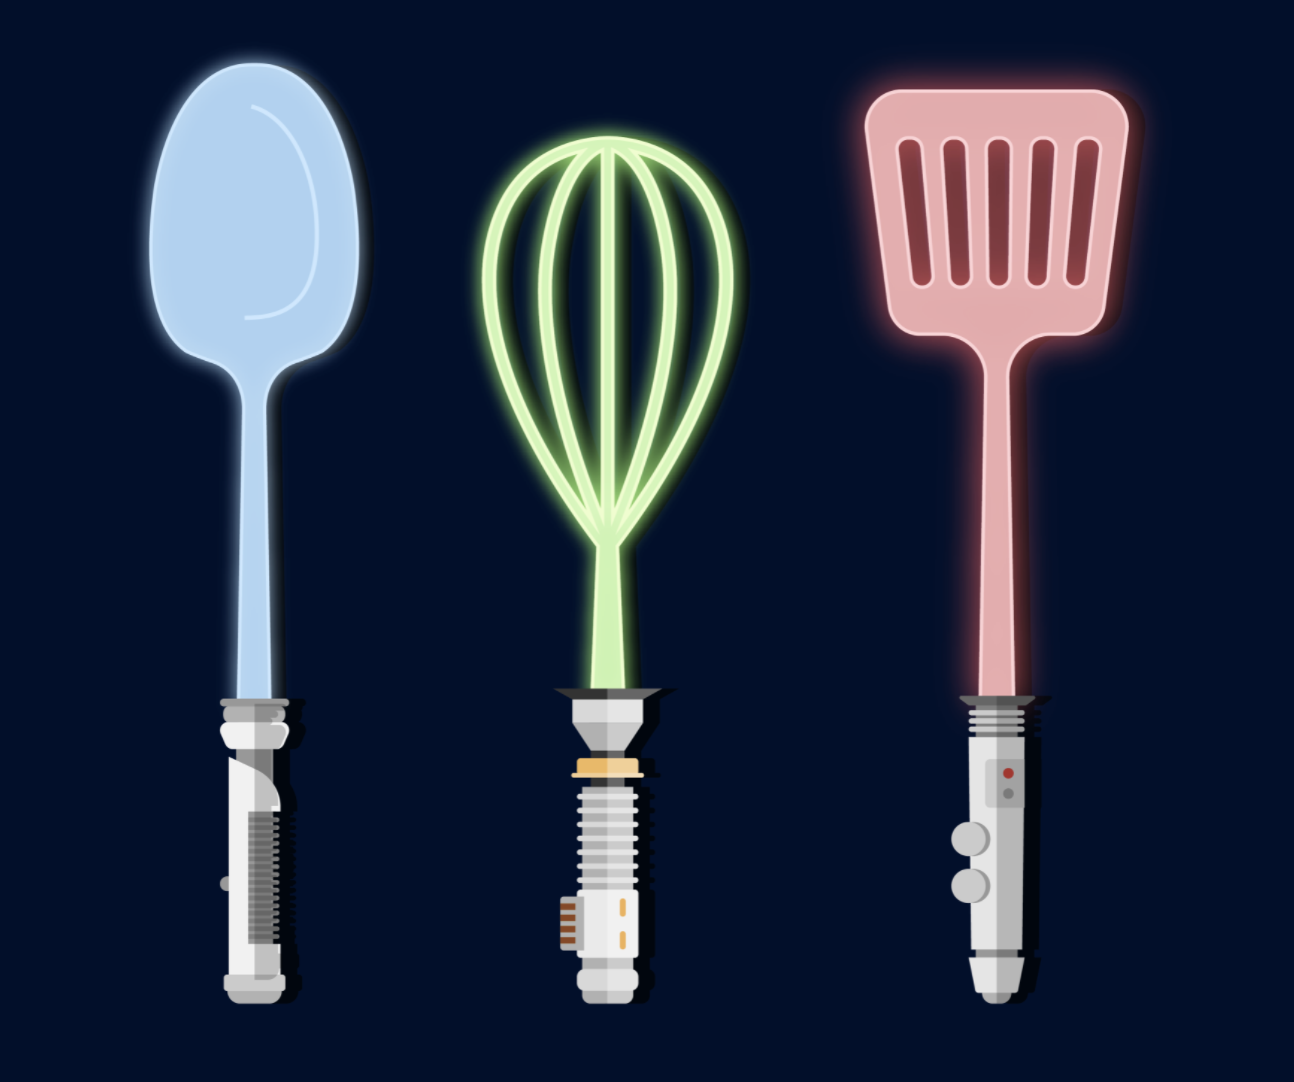 lightsabers as utensils